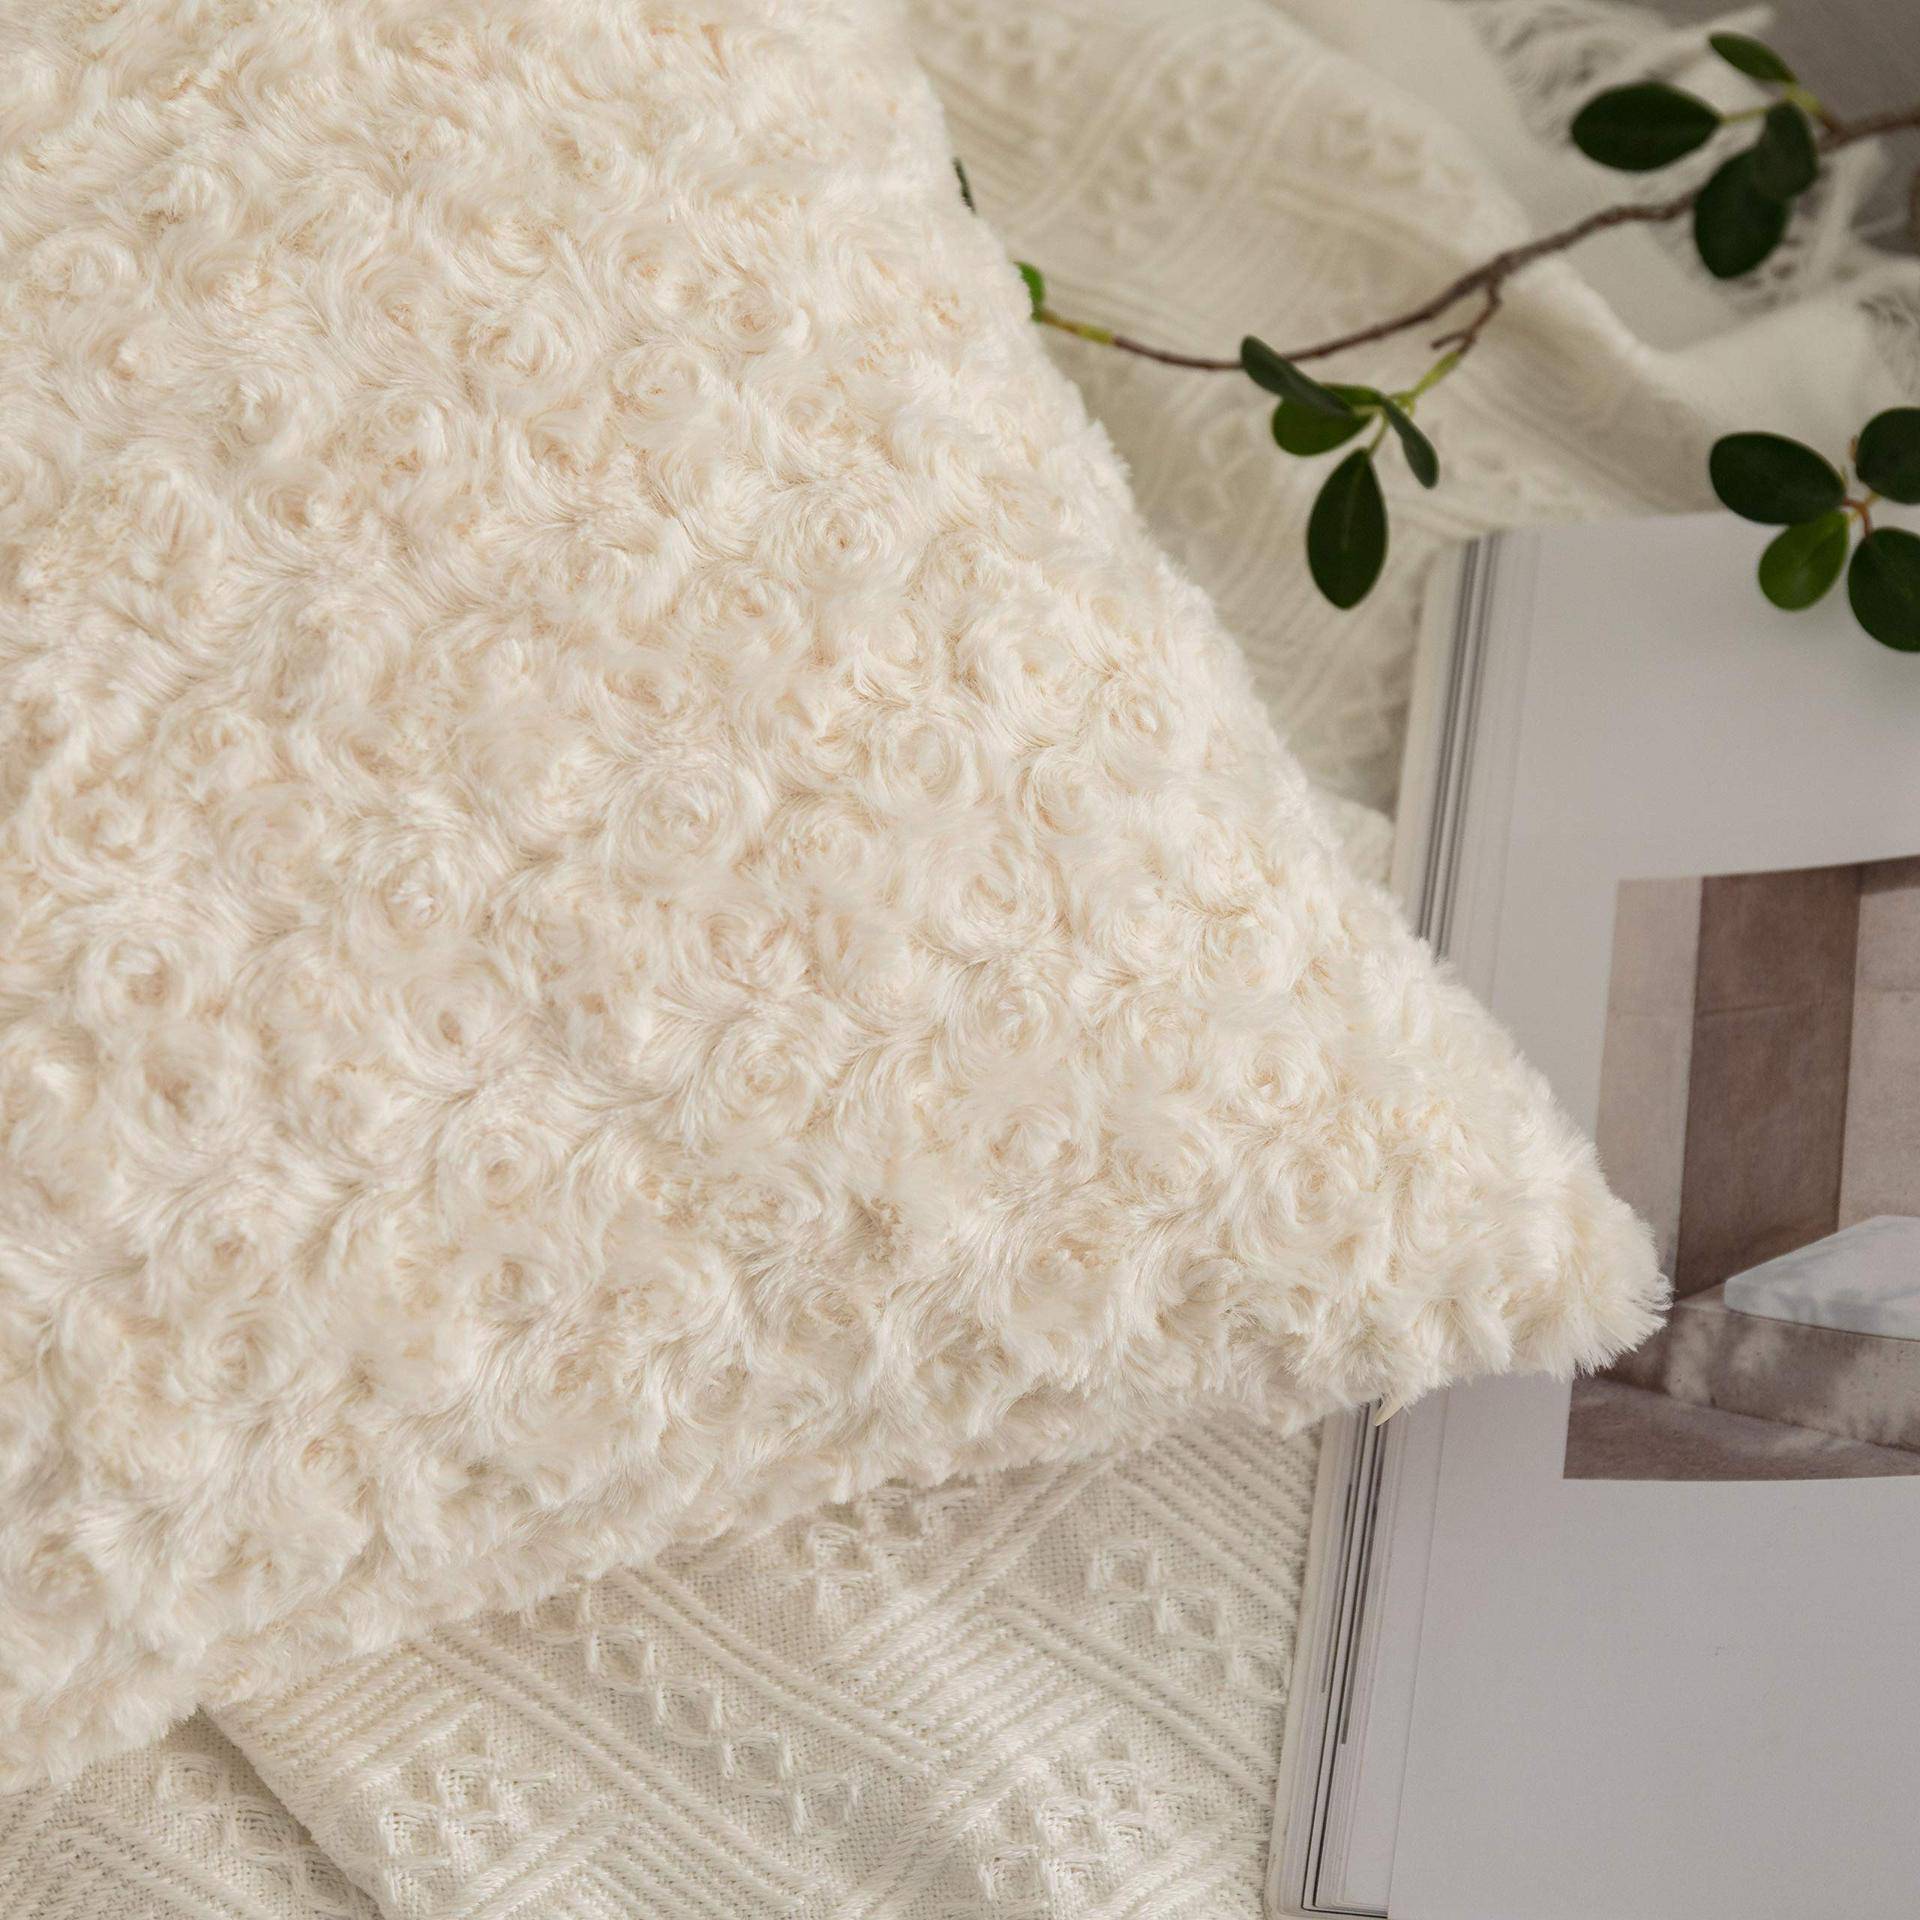 High-Density Skin-Friendly Rose Flower 3D Texture Pillow Cover